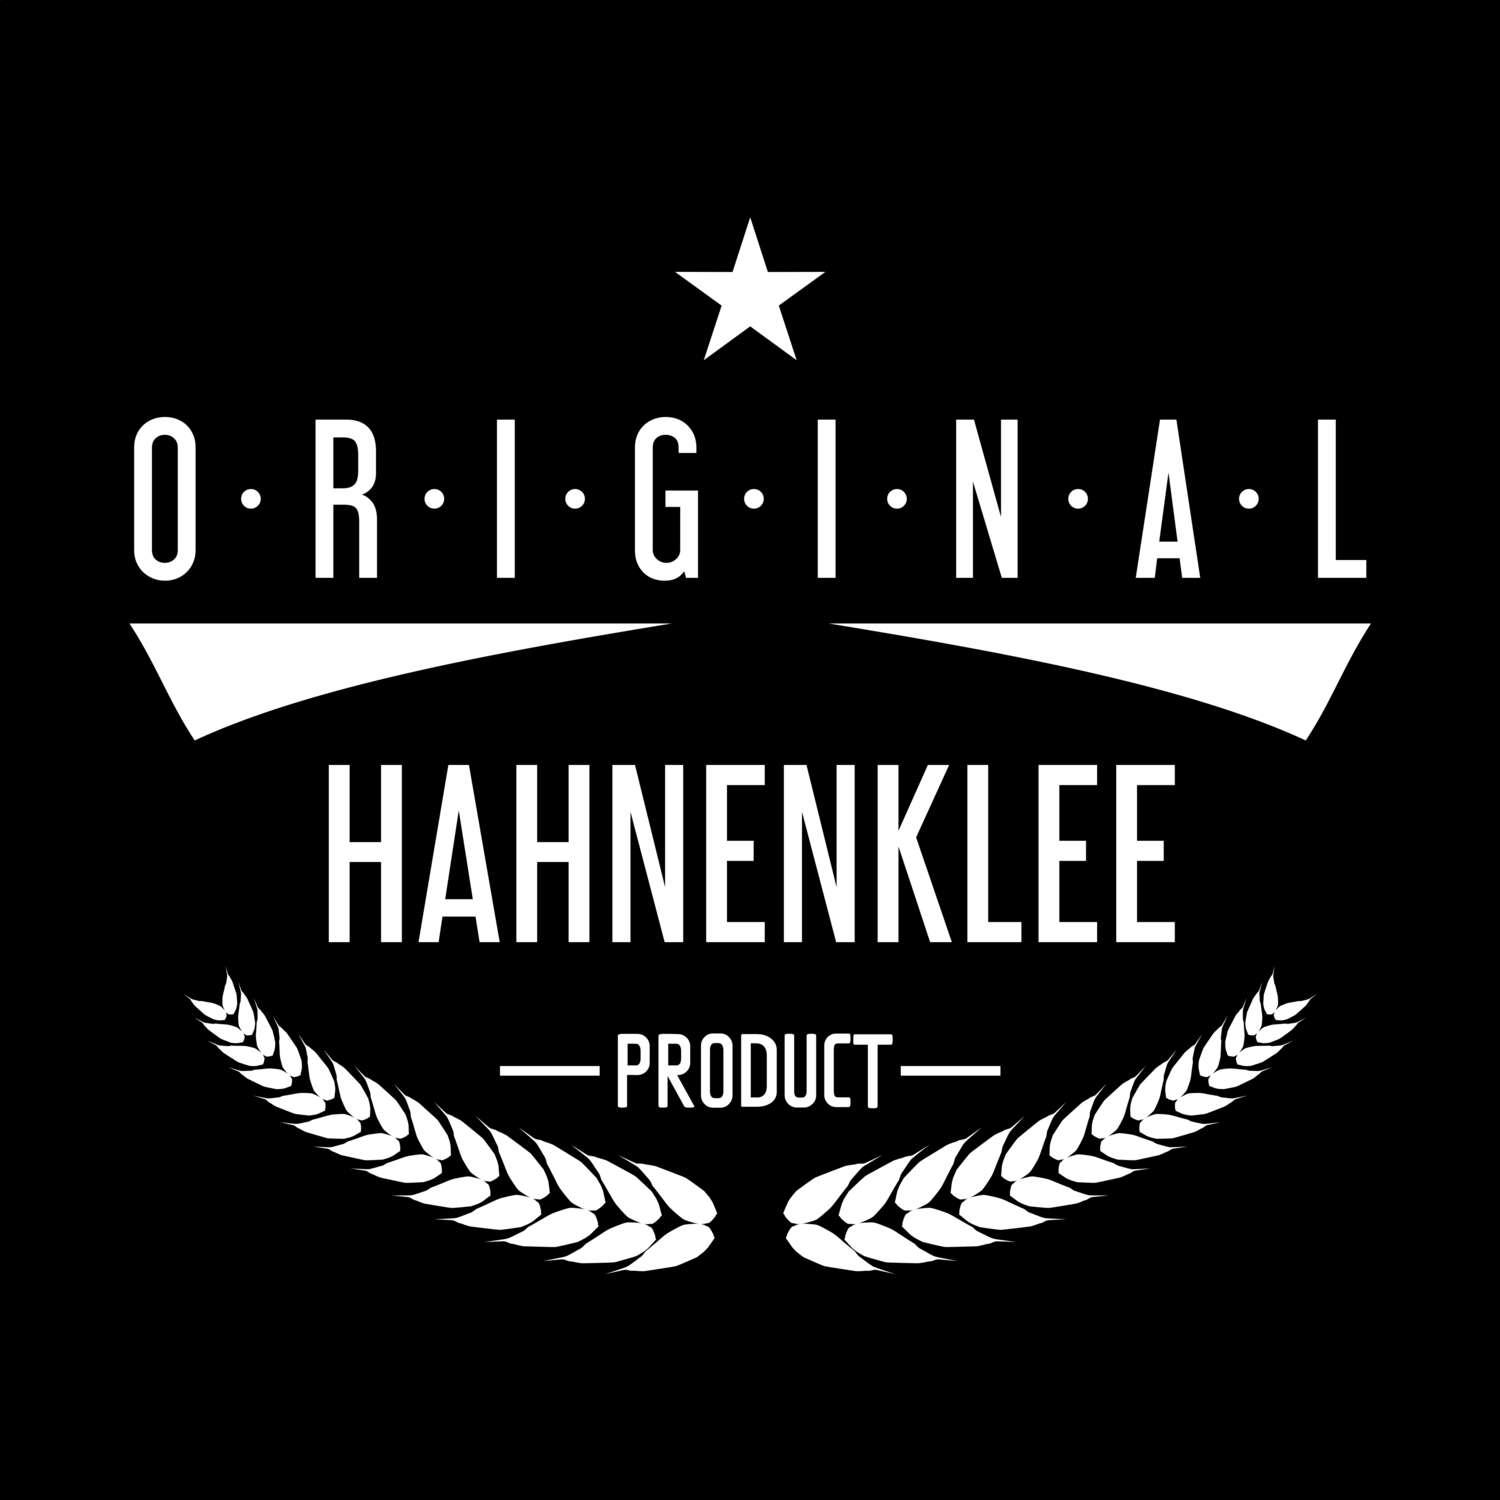 Hahnenklee T-Shirt »Original Product«